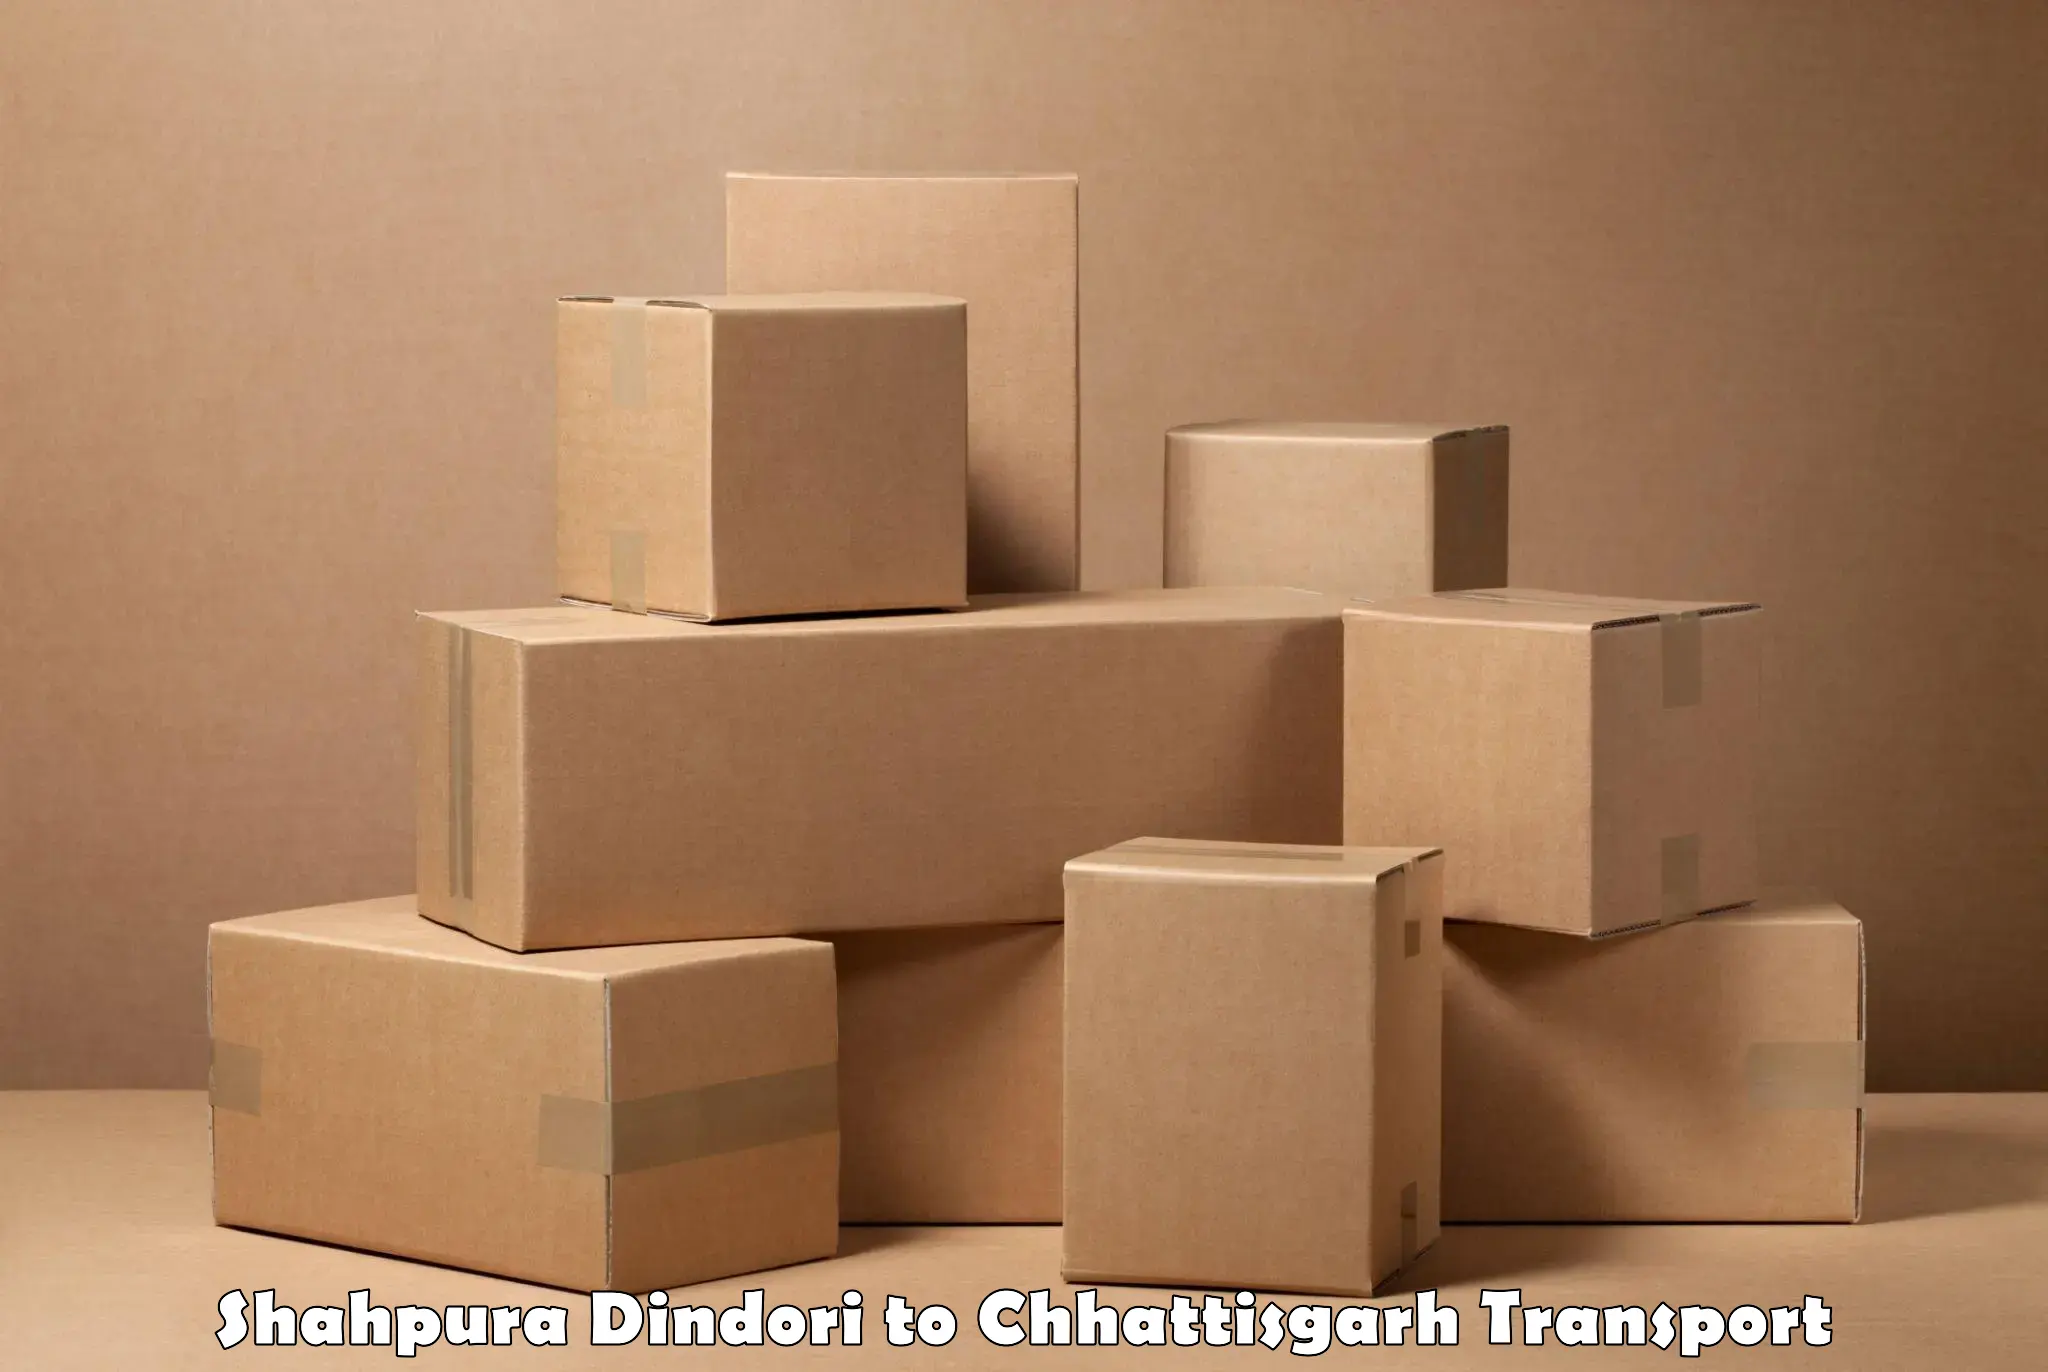 Delivery service Shahpura Dindori to Bijapur Chhattisgarh